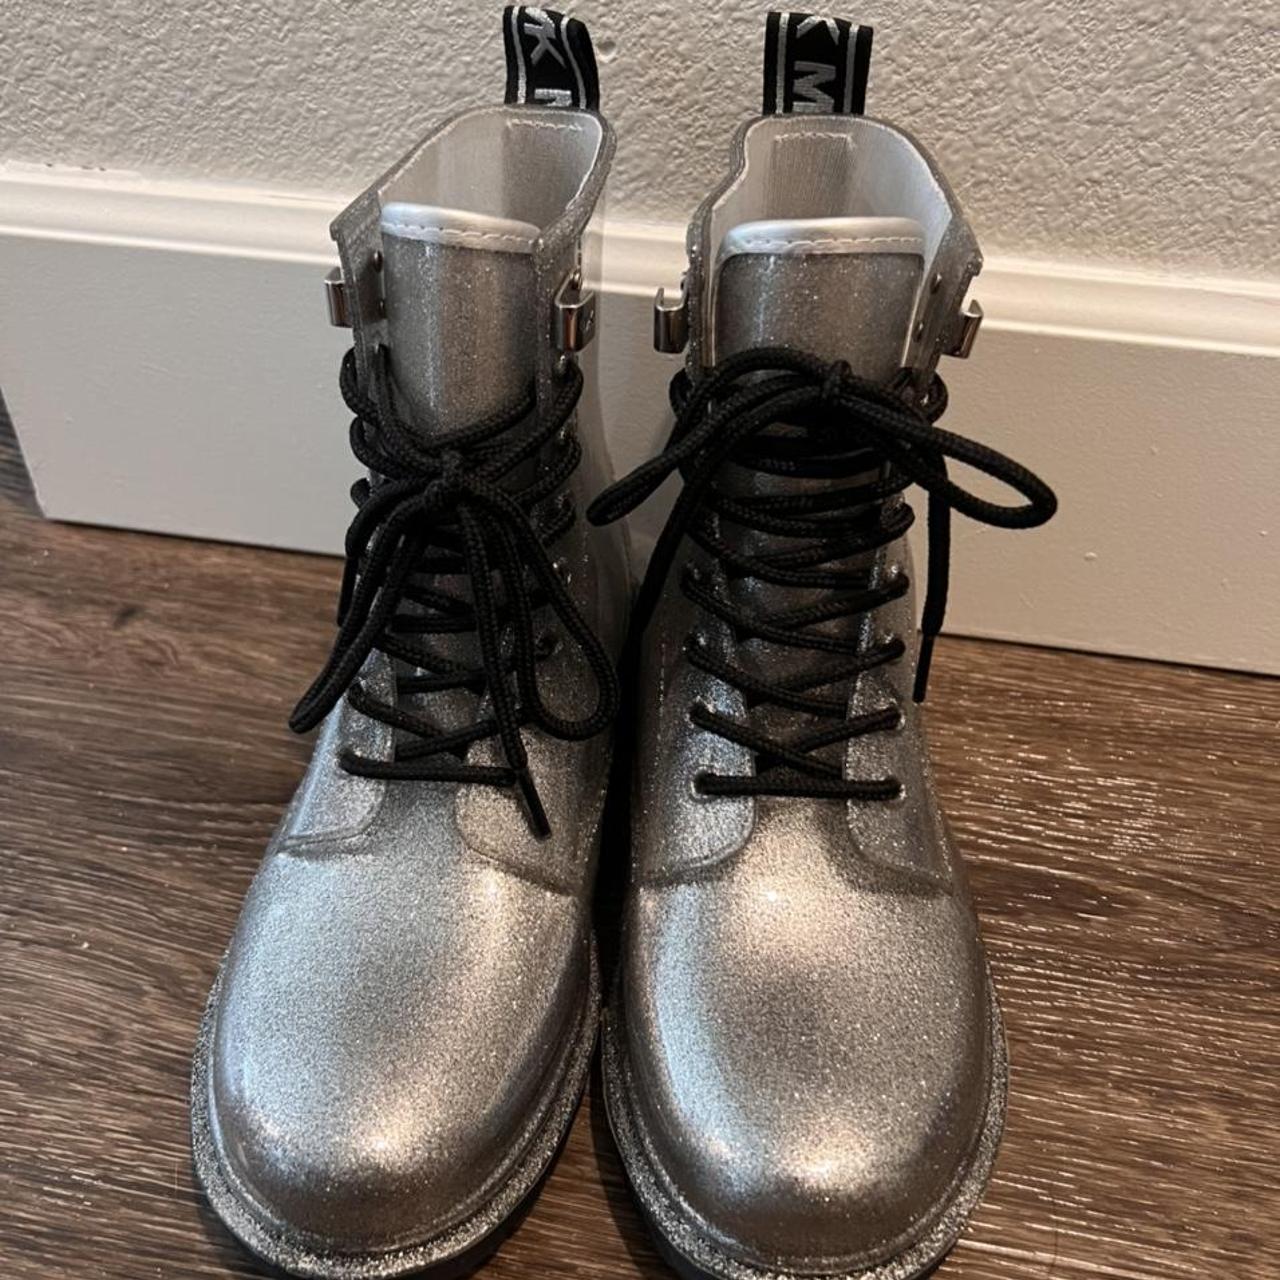 Michael Kors rain boots. Barely worn - no need for